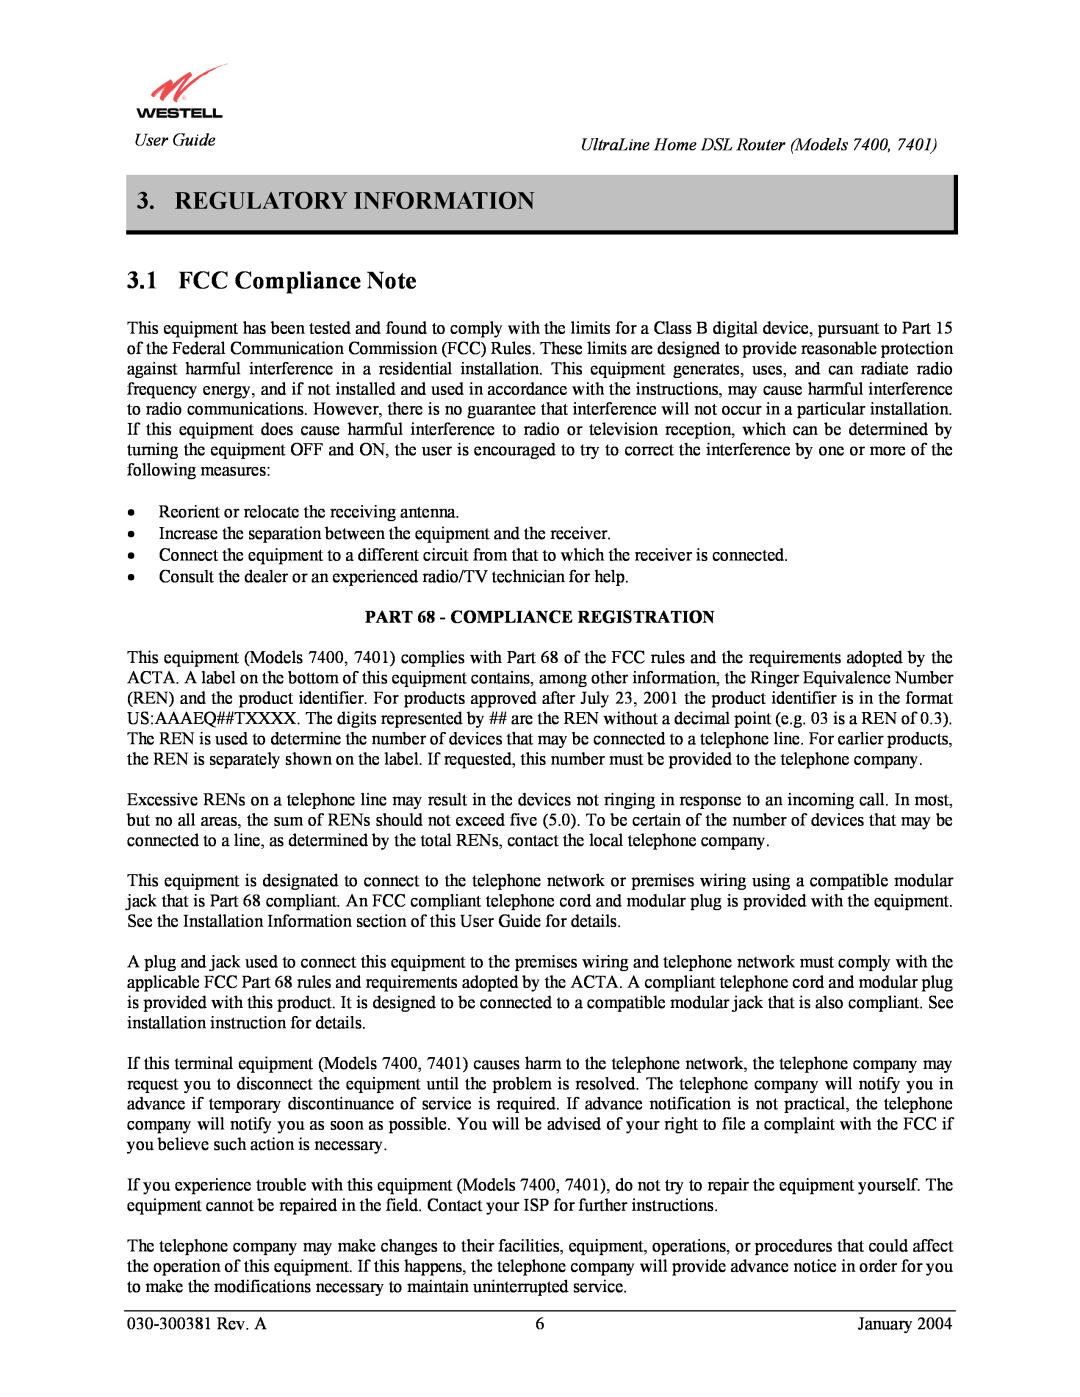 Westell Technologies 7401, 7400 manual REGULATORY INFORMATION 3.1 FCC Compliance Note, PART 68 - COMPLIANCE REGISTRATION 